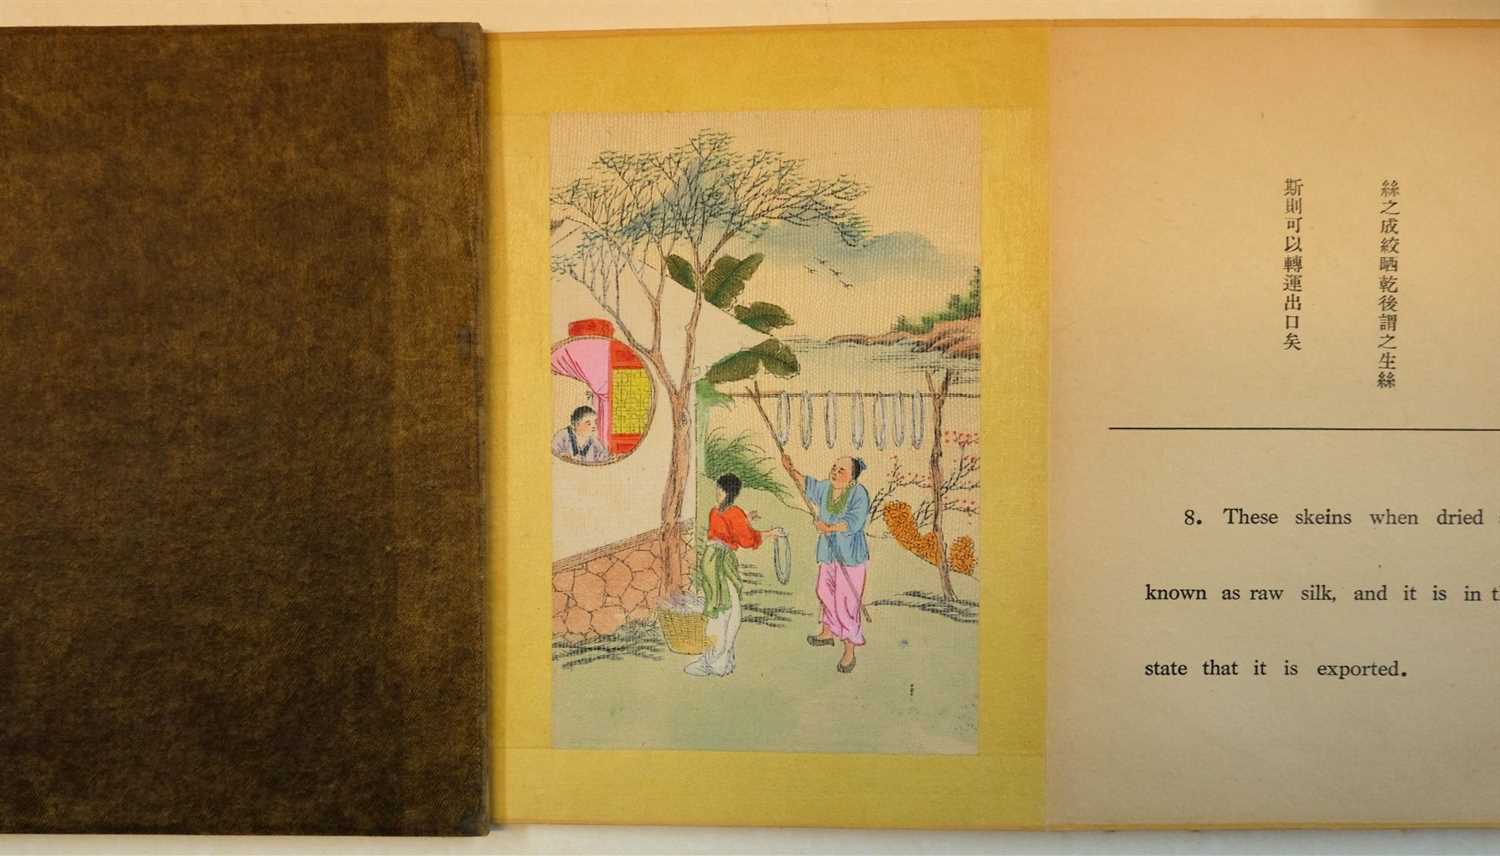 Lot 53 - China. Five Chinese picture books, circa 1950